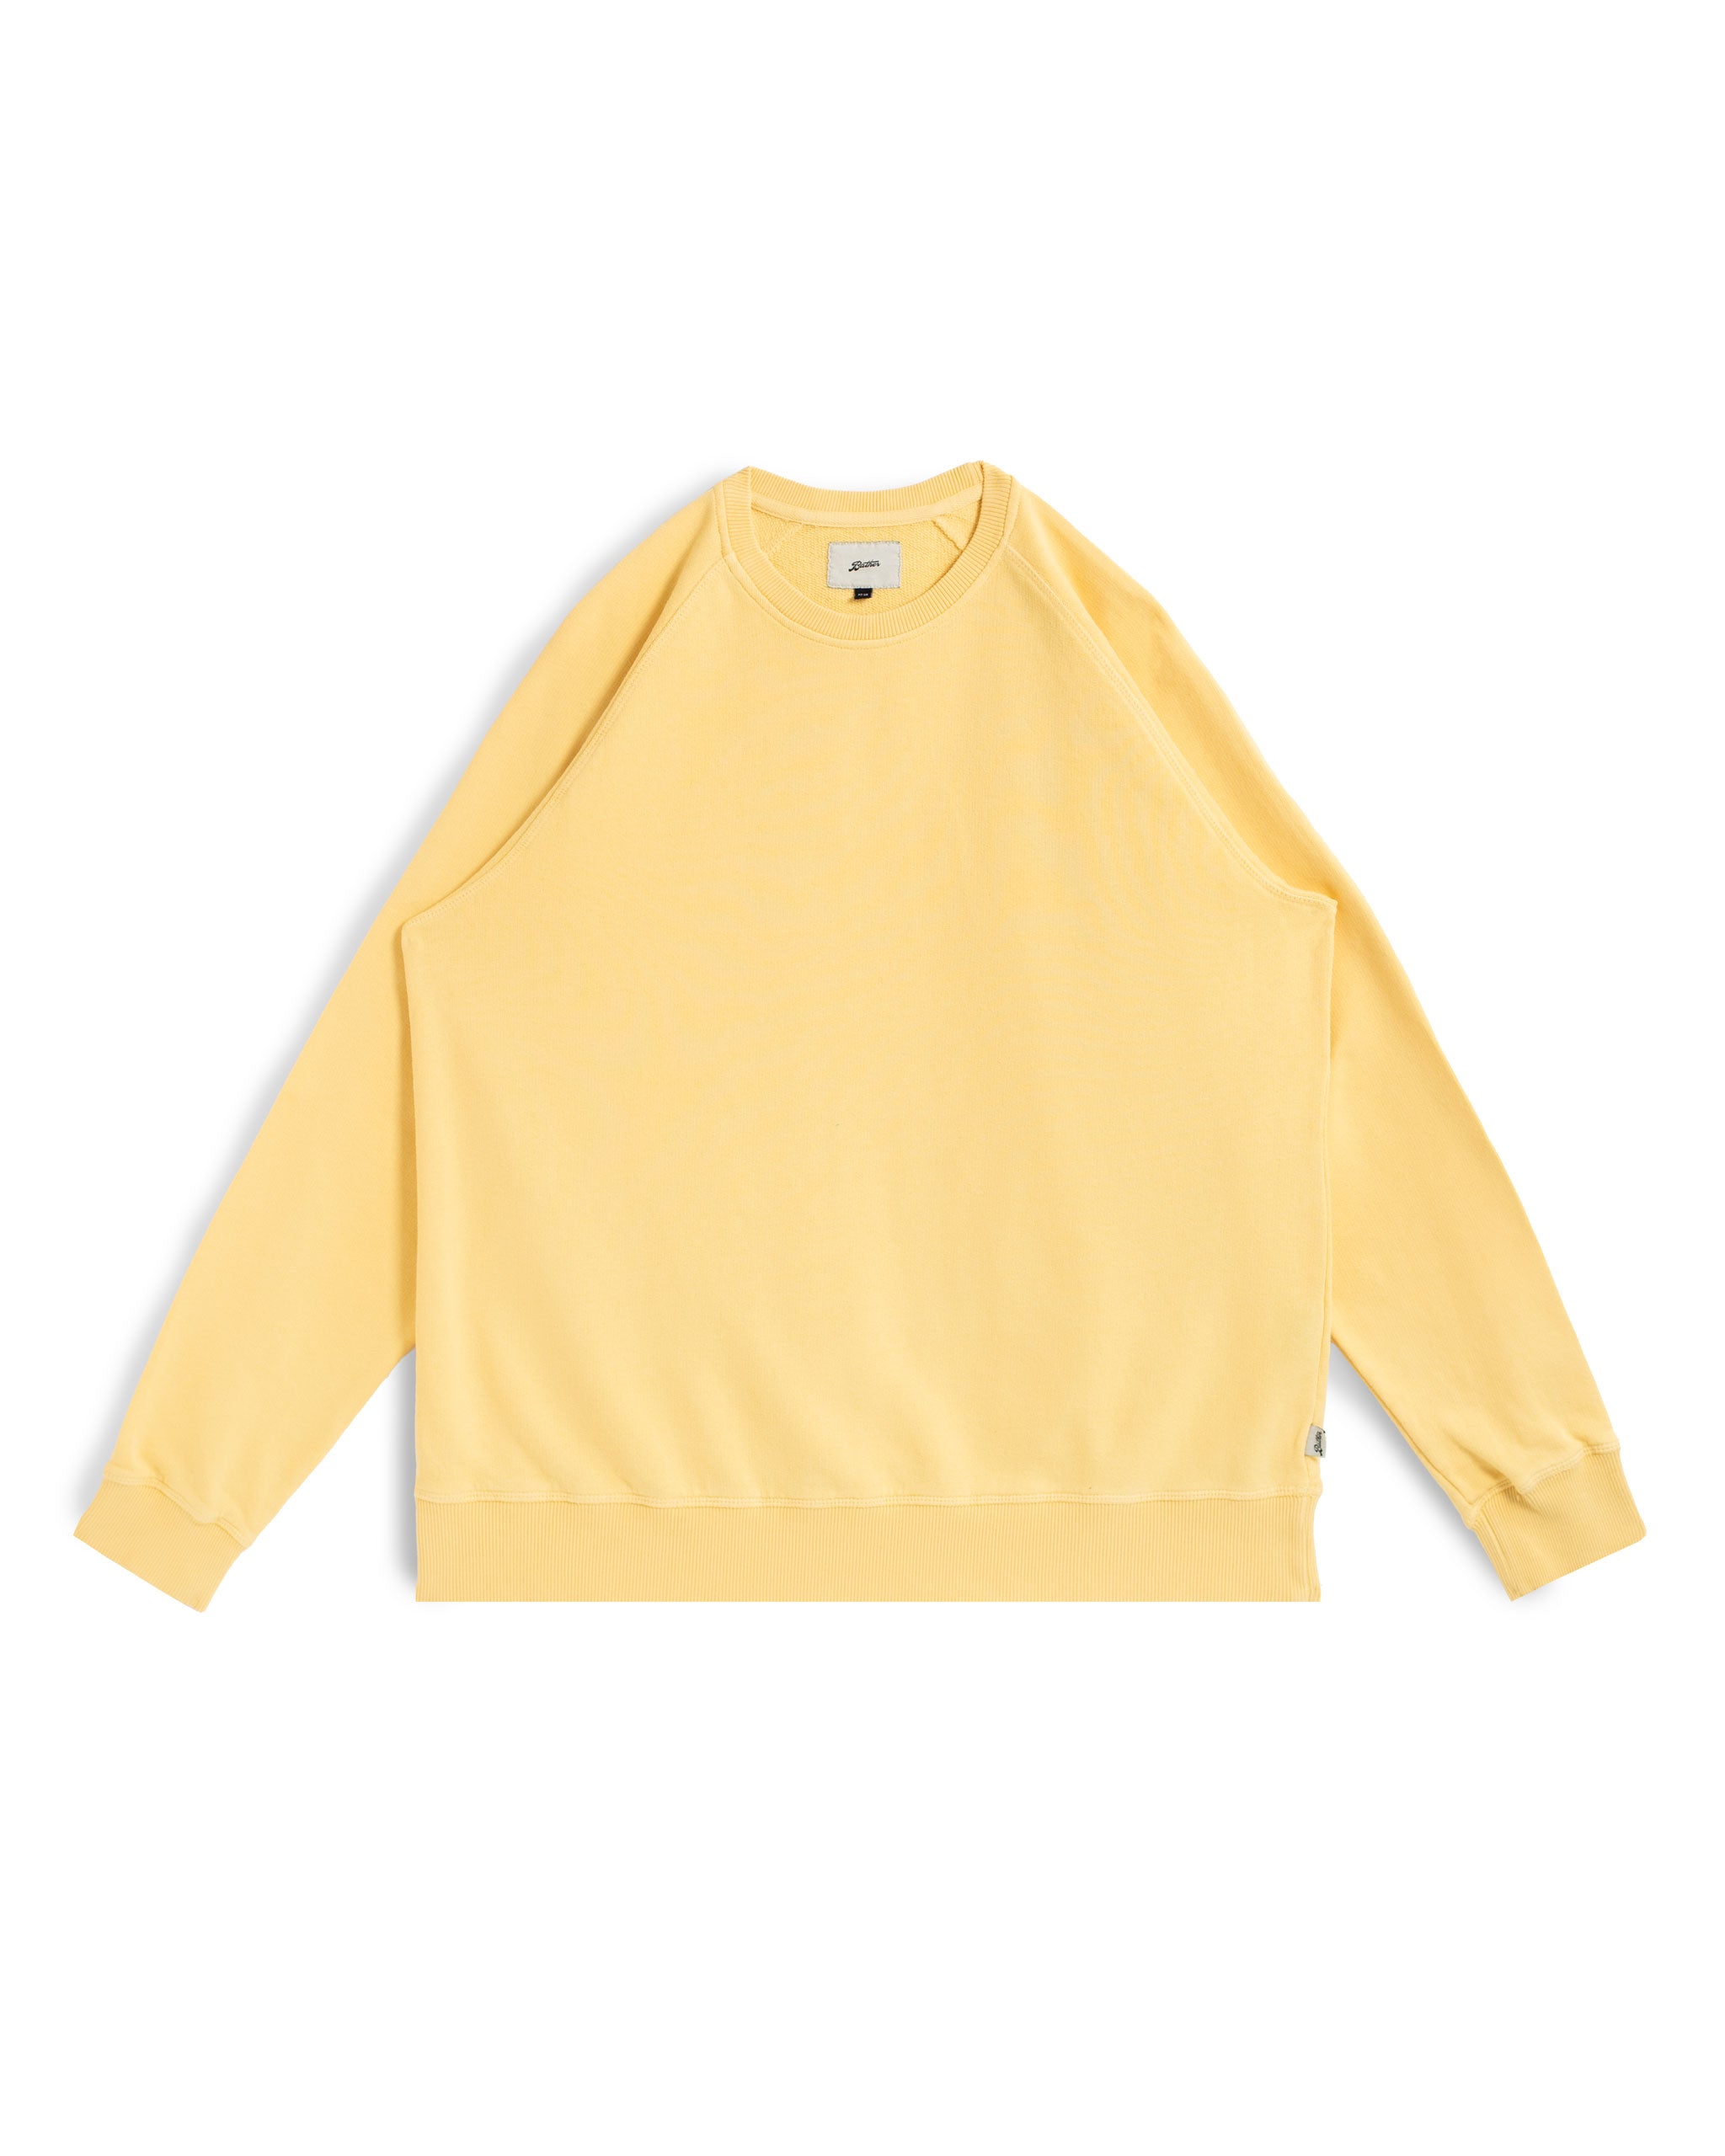 Canary yellow french terry raglan sleeve crewneck sweatshirt